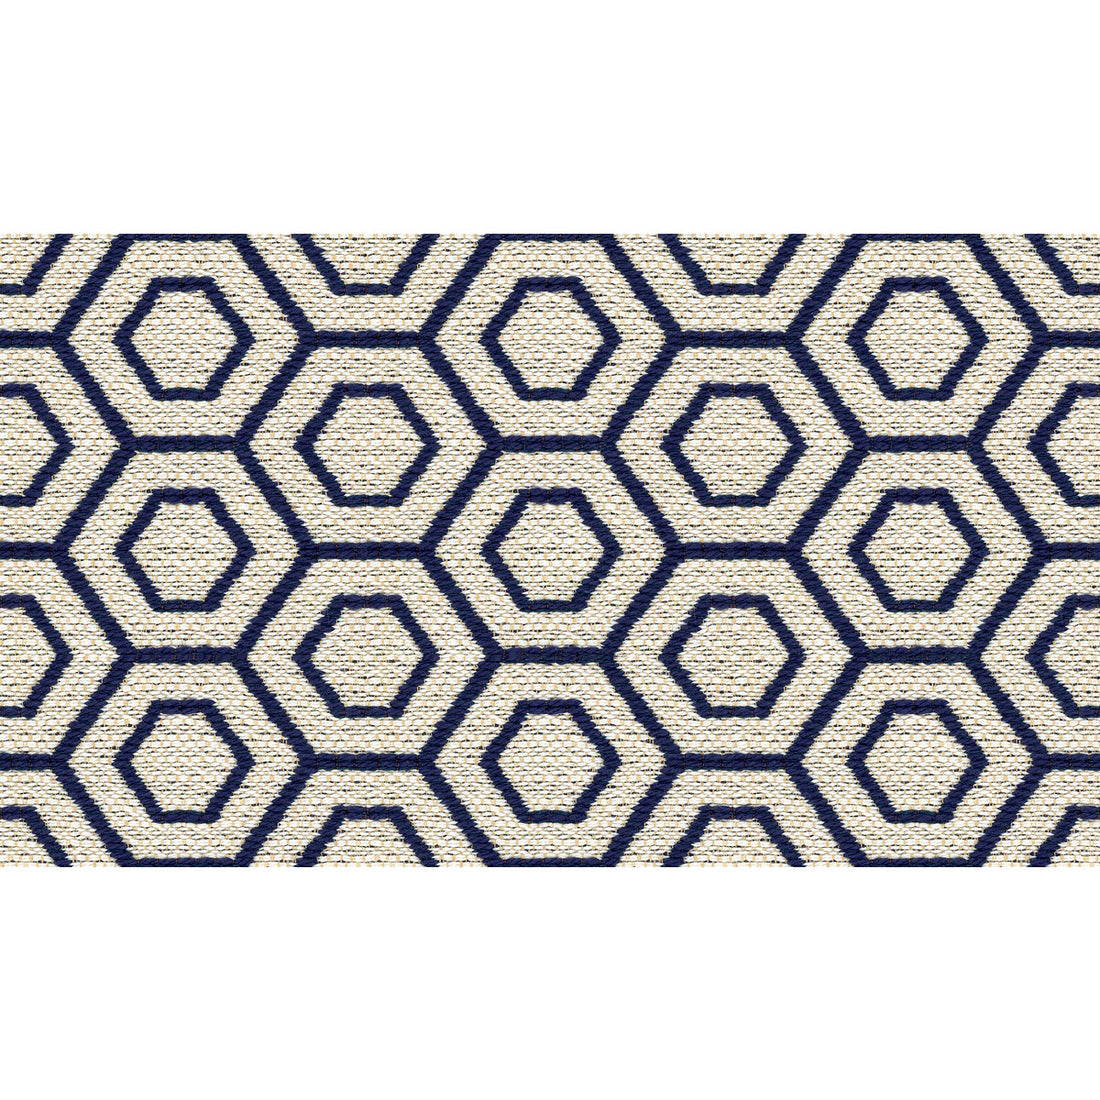 Kravet Smart fabric in 34301-516 color - pattern 34301.516.0 - by Kravet Smart